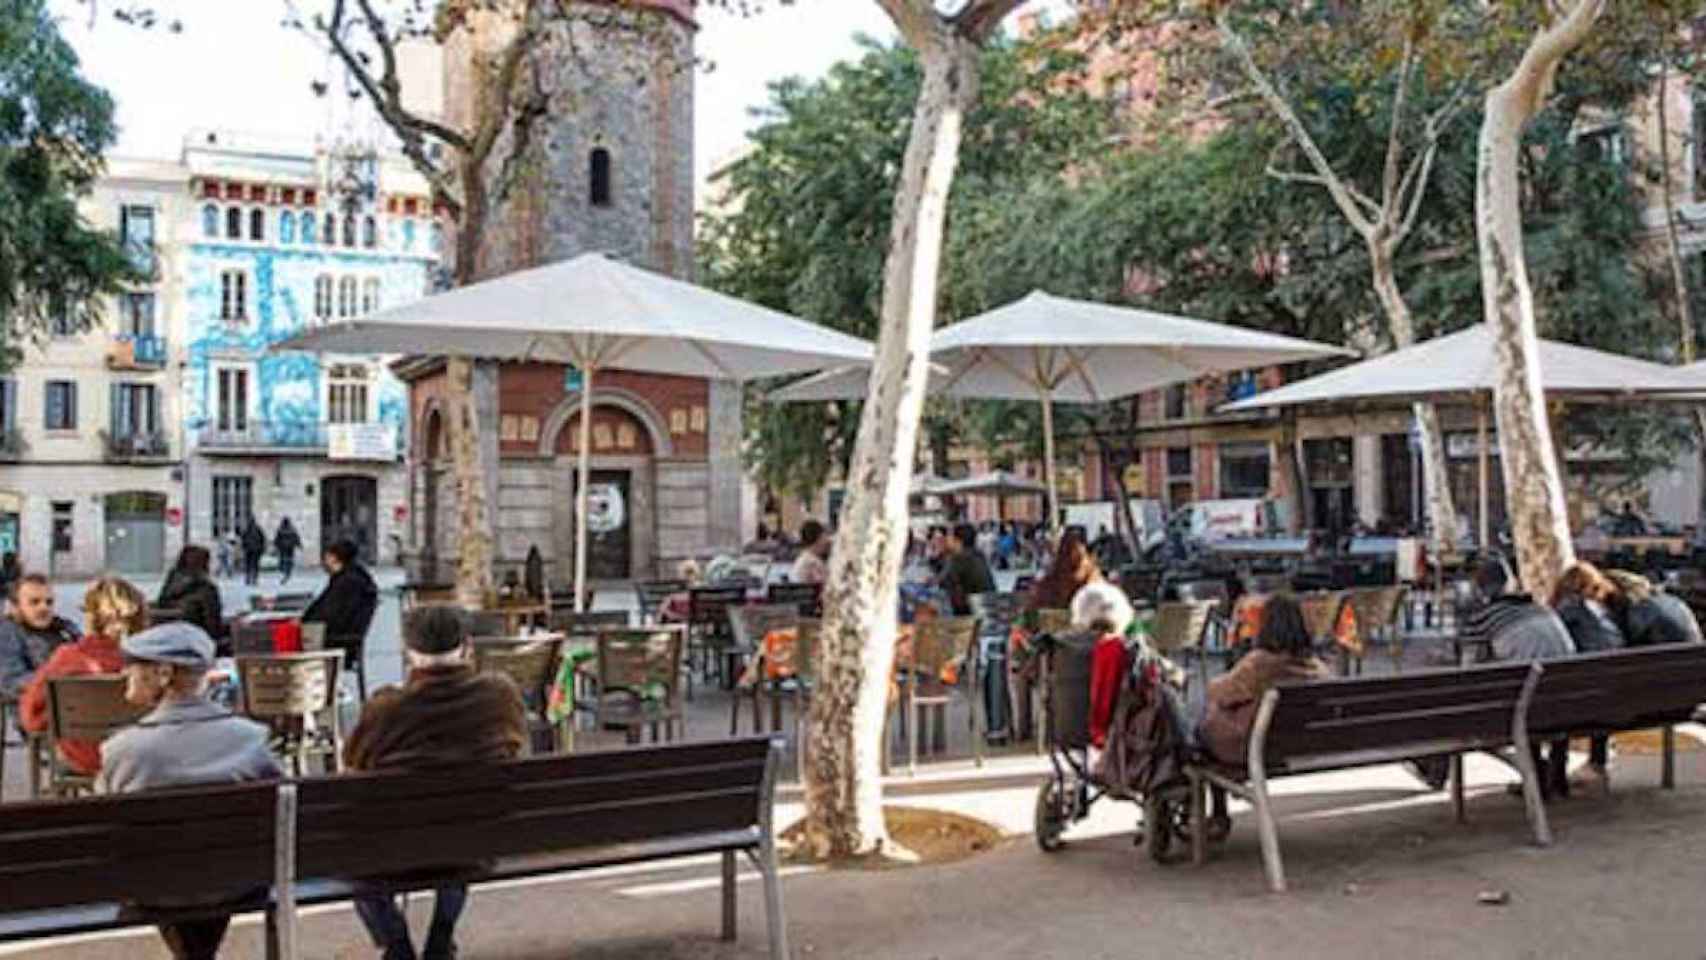 La plaza de la Vila de Gràcia / AYUNTAMIENTO DE BARCELONA